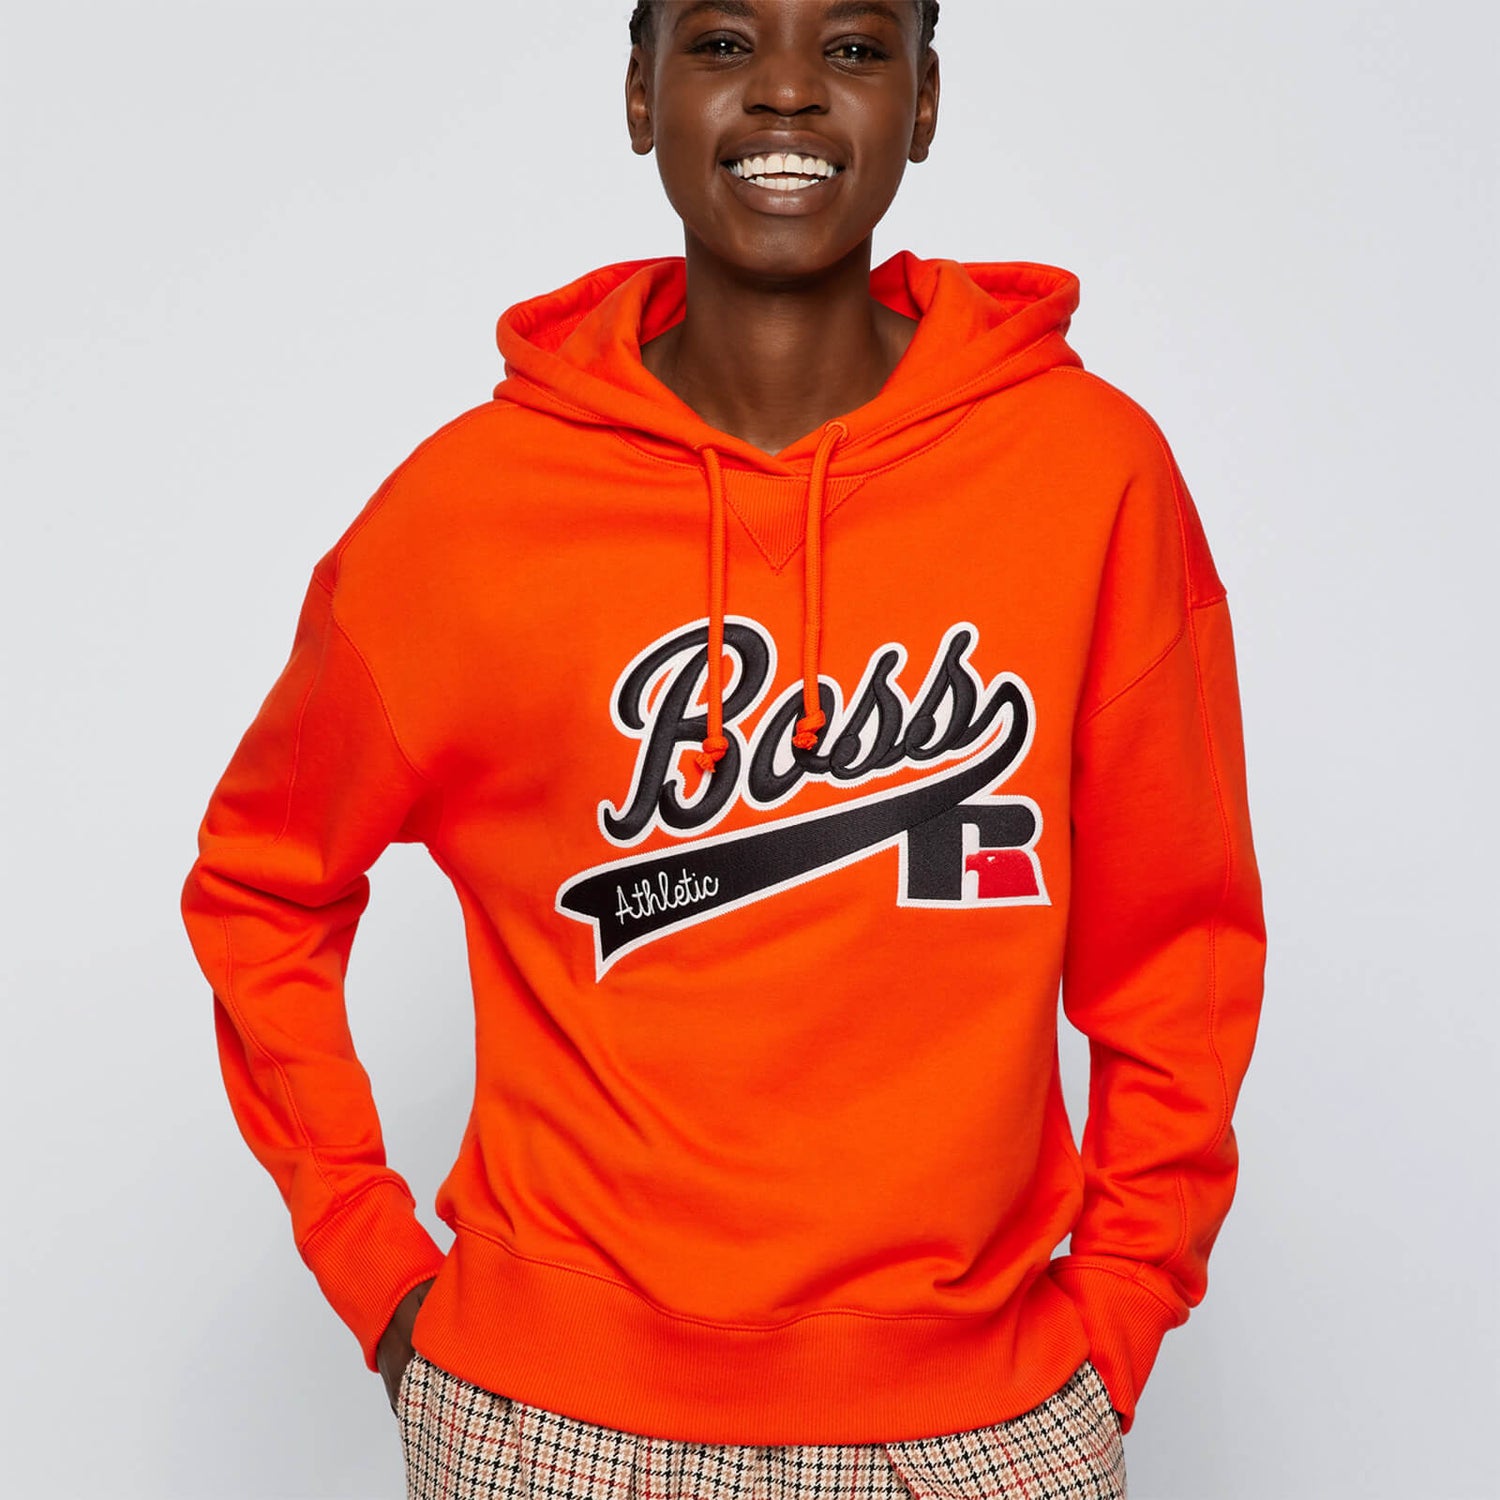 BOSS X Russell Athletic Women's Eraisy Hoodie - Bright Orange